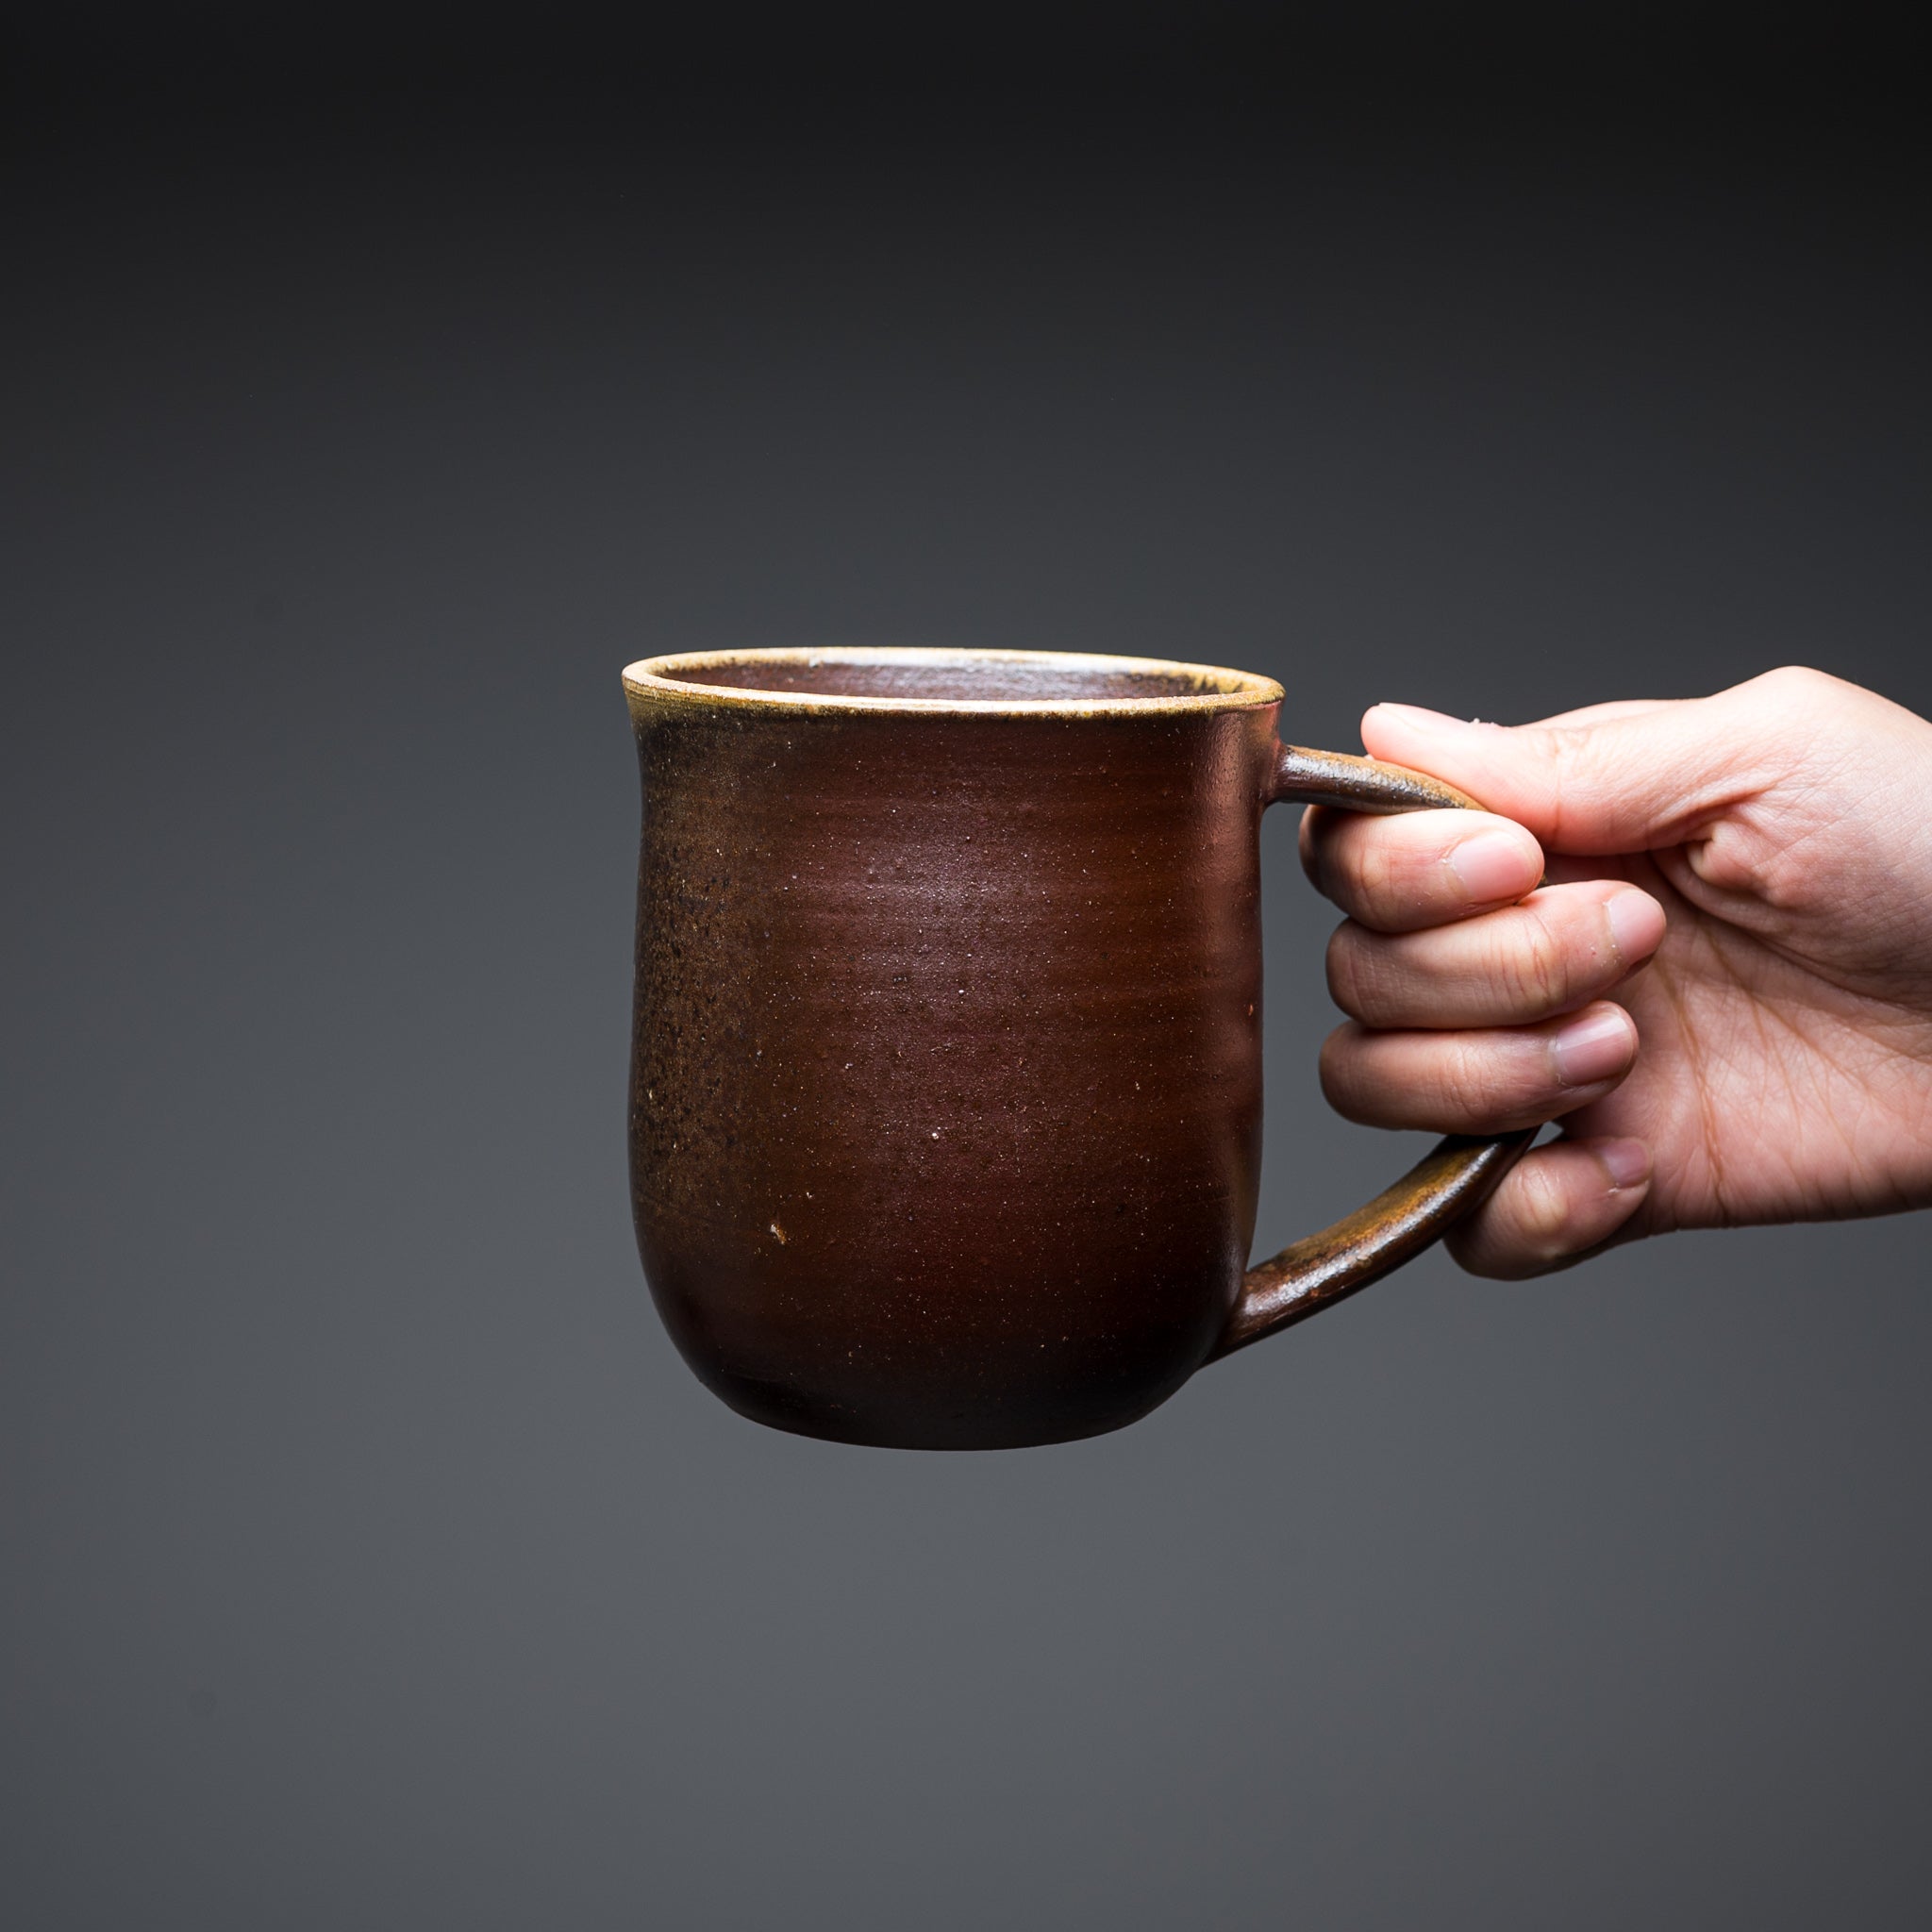 Bizen Pottery Large Mug Cup - Goma / 備前焼 マグカップ